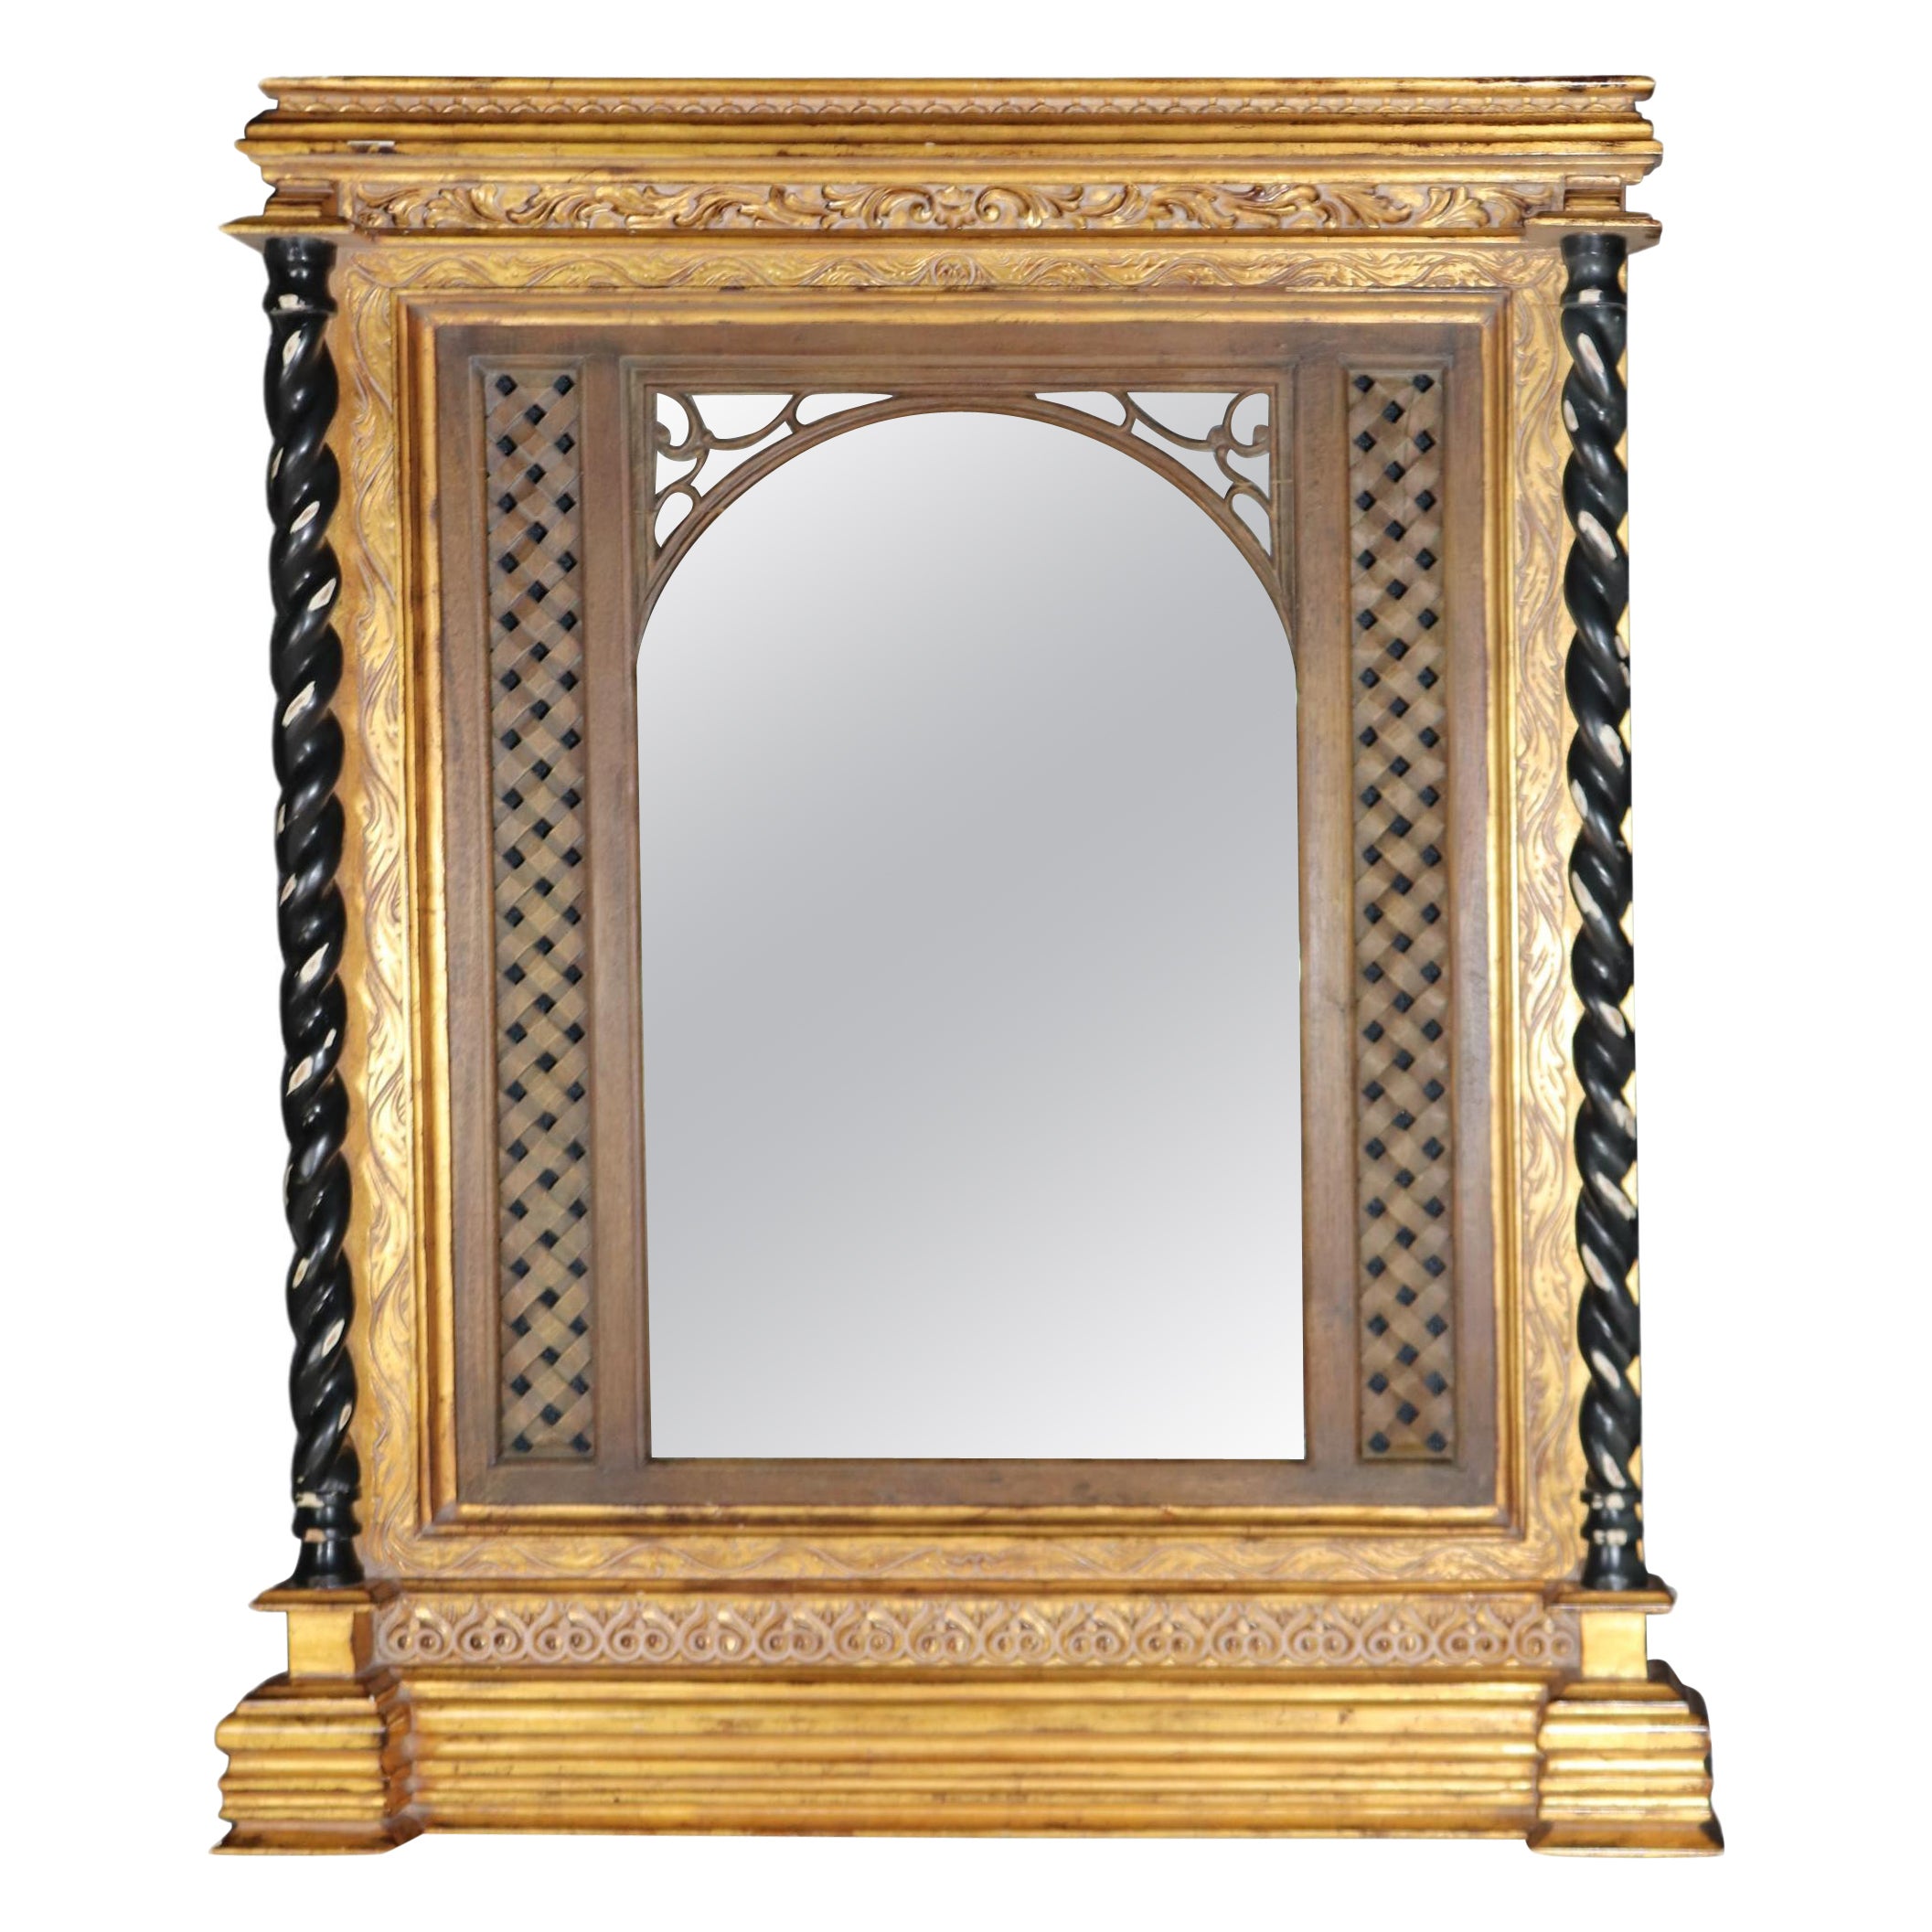 Large English Gothic Continental Style Ebonized Gilded Mantle Buffet Mirror